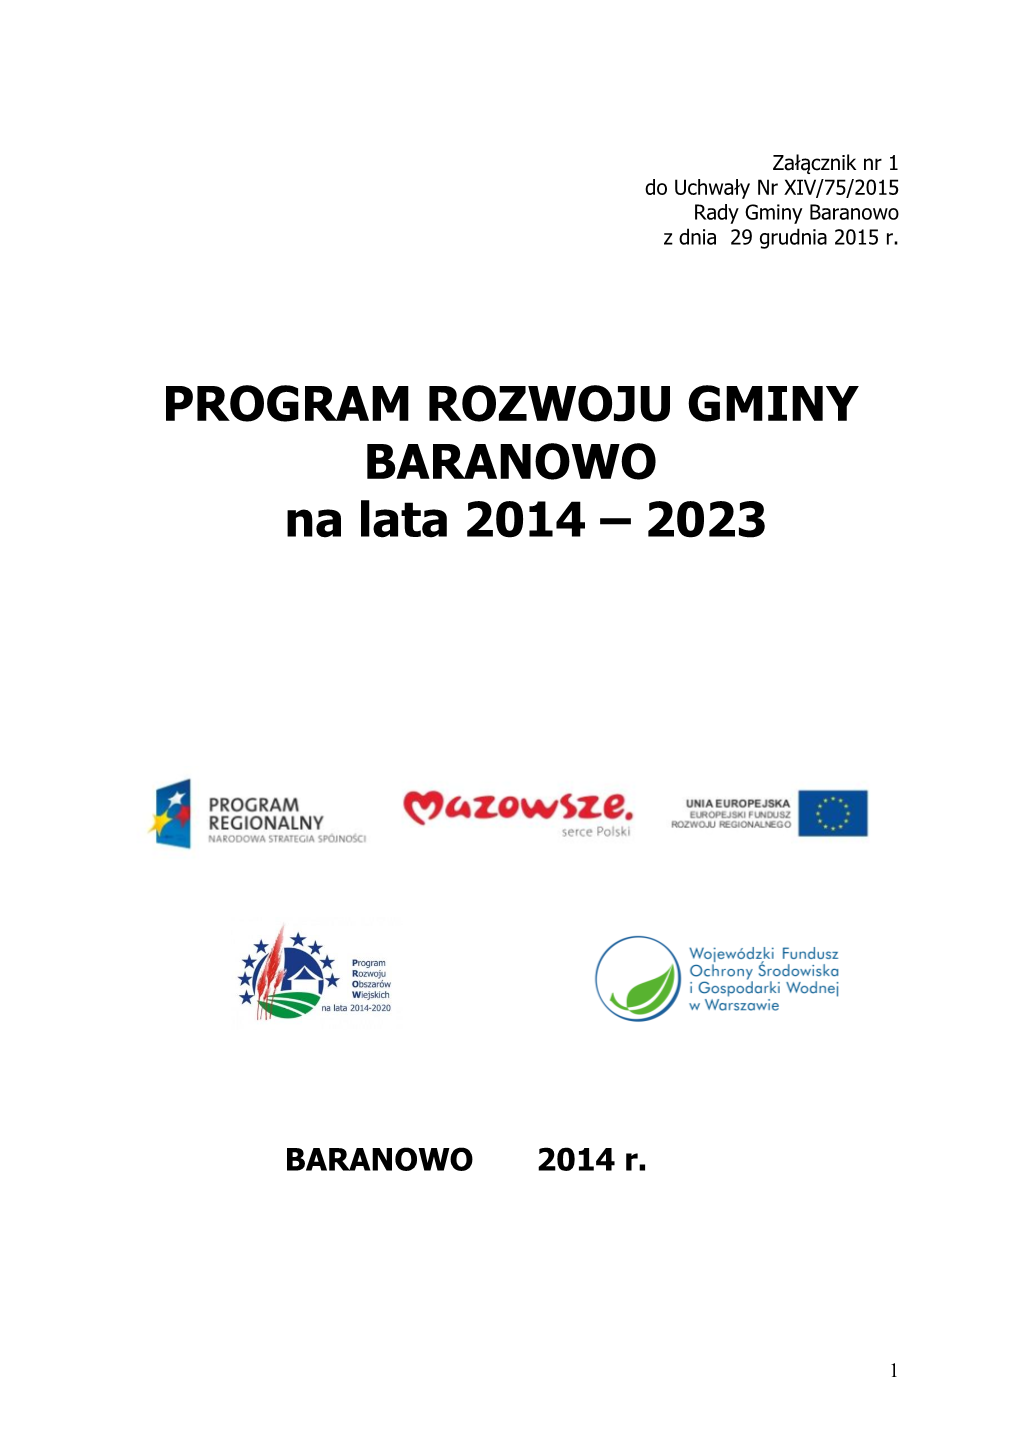 PROGRAM ROZWOJU GMINY BARANOWO Na Lata 2014 – 2023